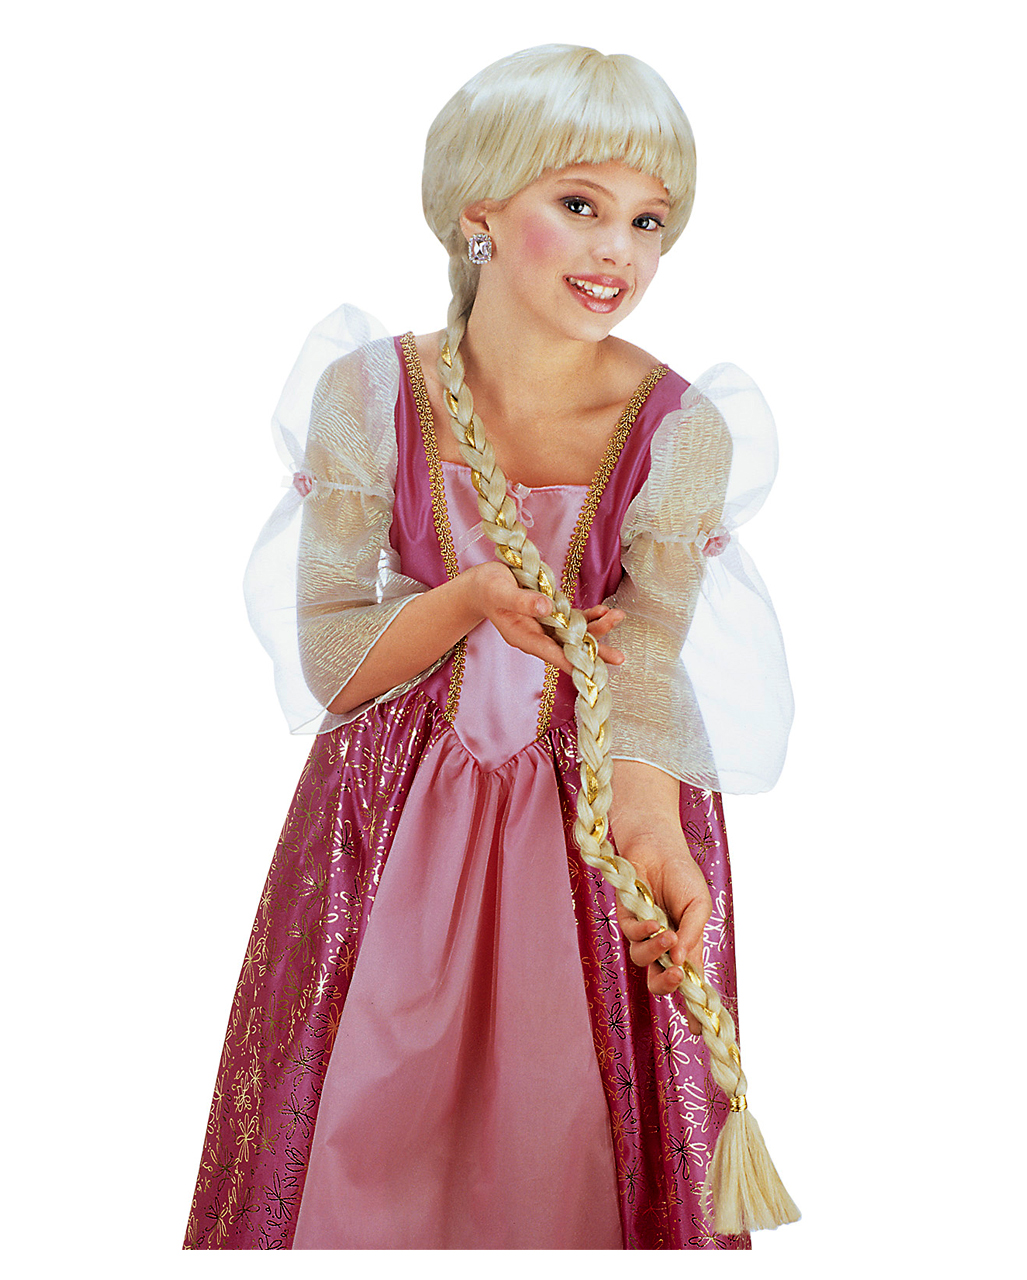 Blonde Princess Long Wig Fairytale Fancy Dress Kid's Costume Girls Accessory